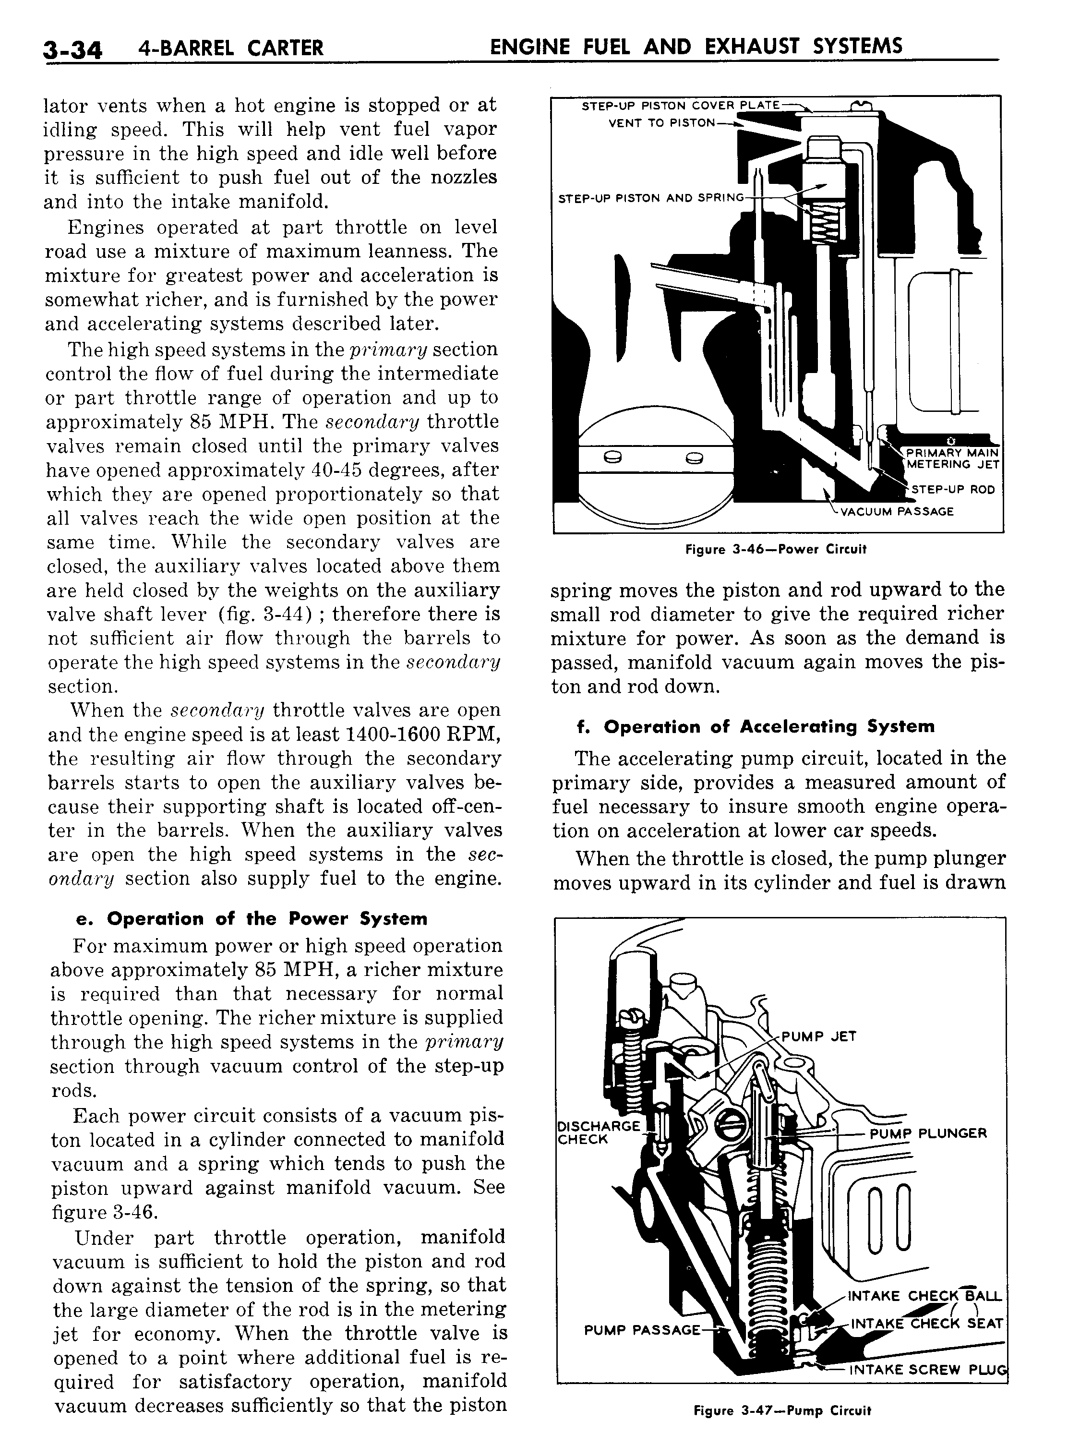 n_04 1957 Buick Shop Manual - Engine Fuel & Exhaust-034-034.jpg